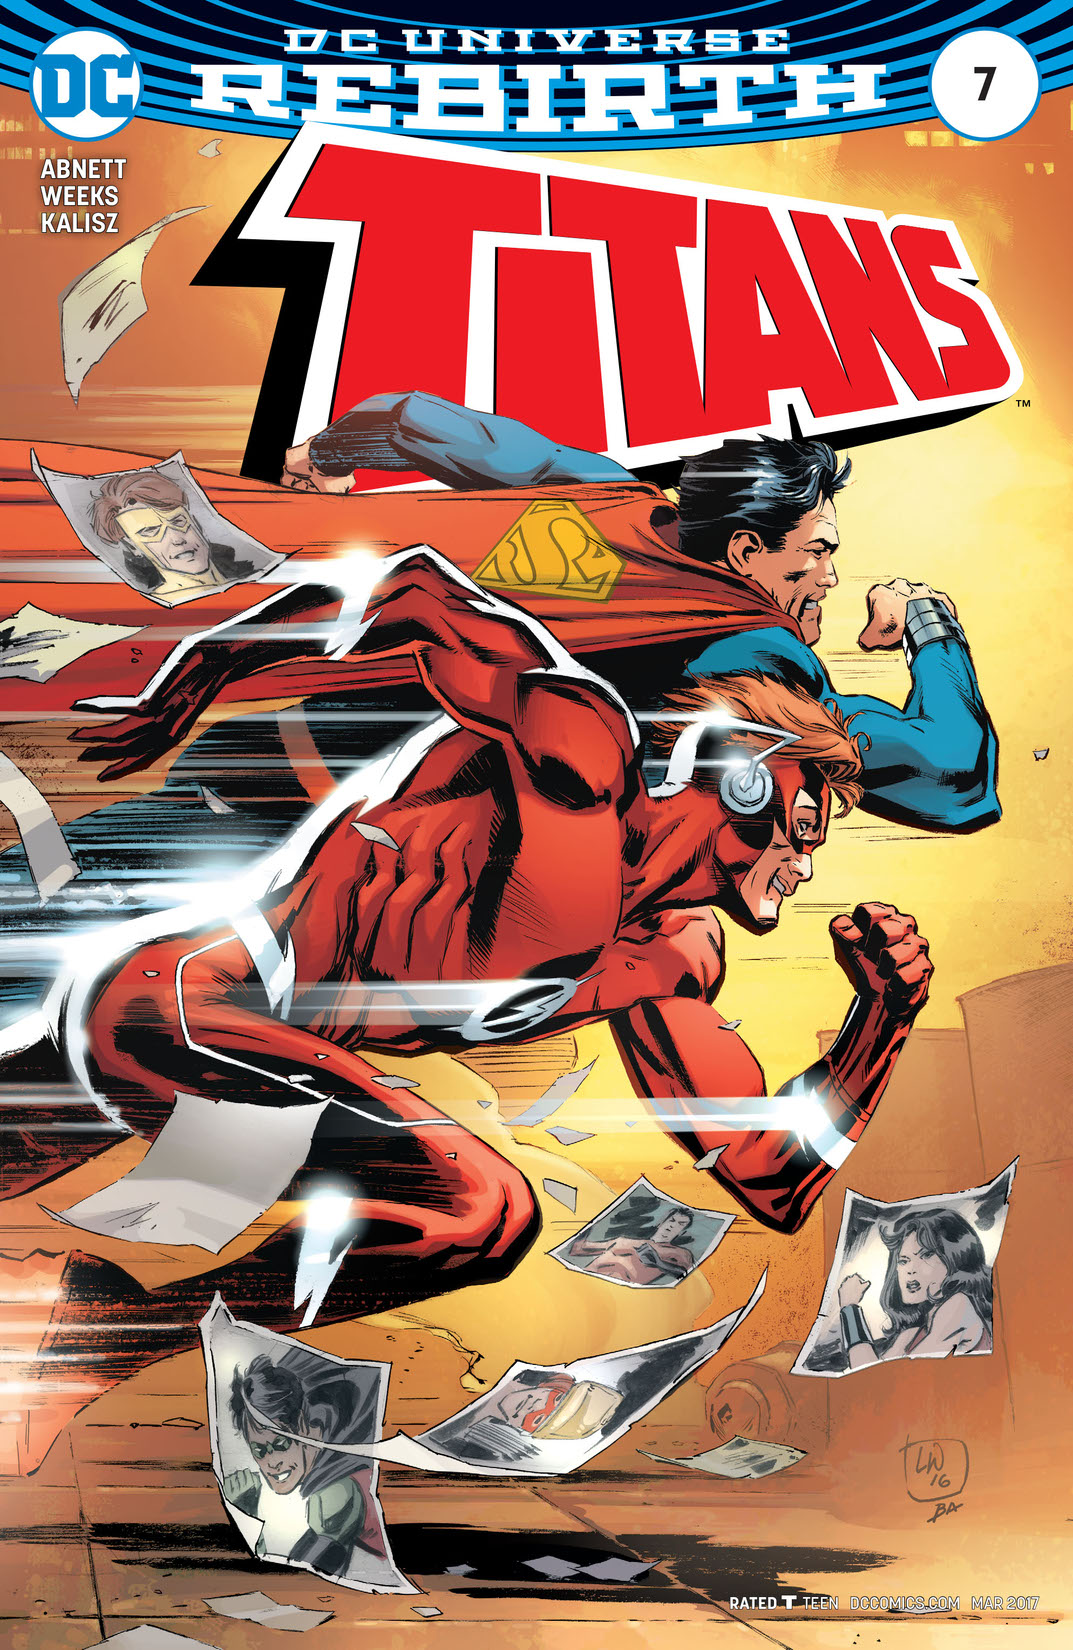 Titans (2016-) #7 preview images